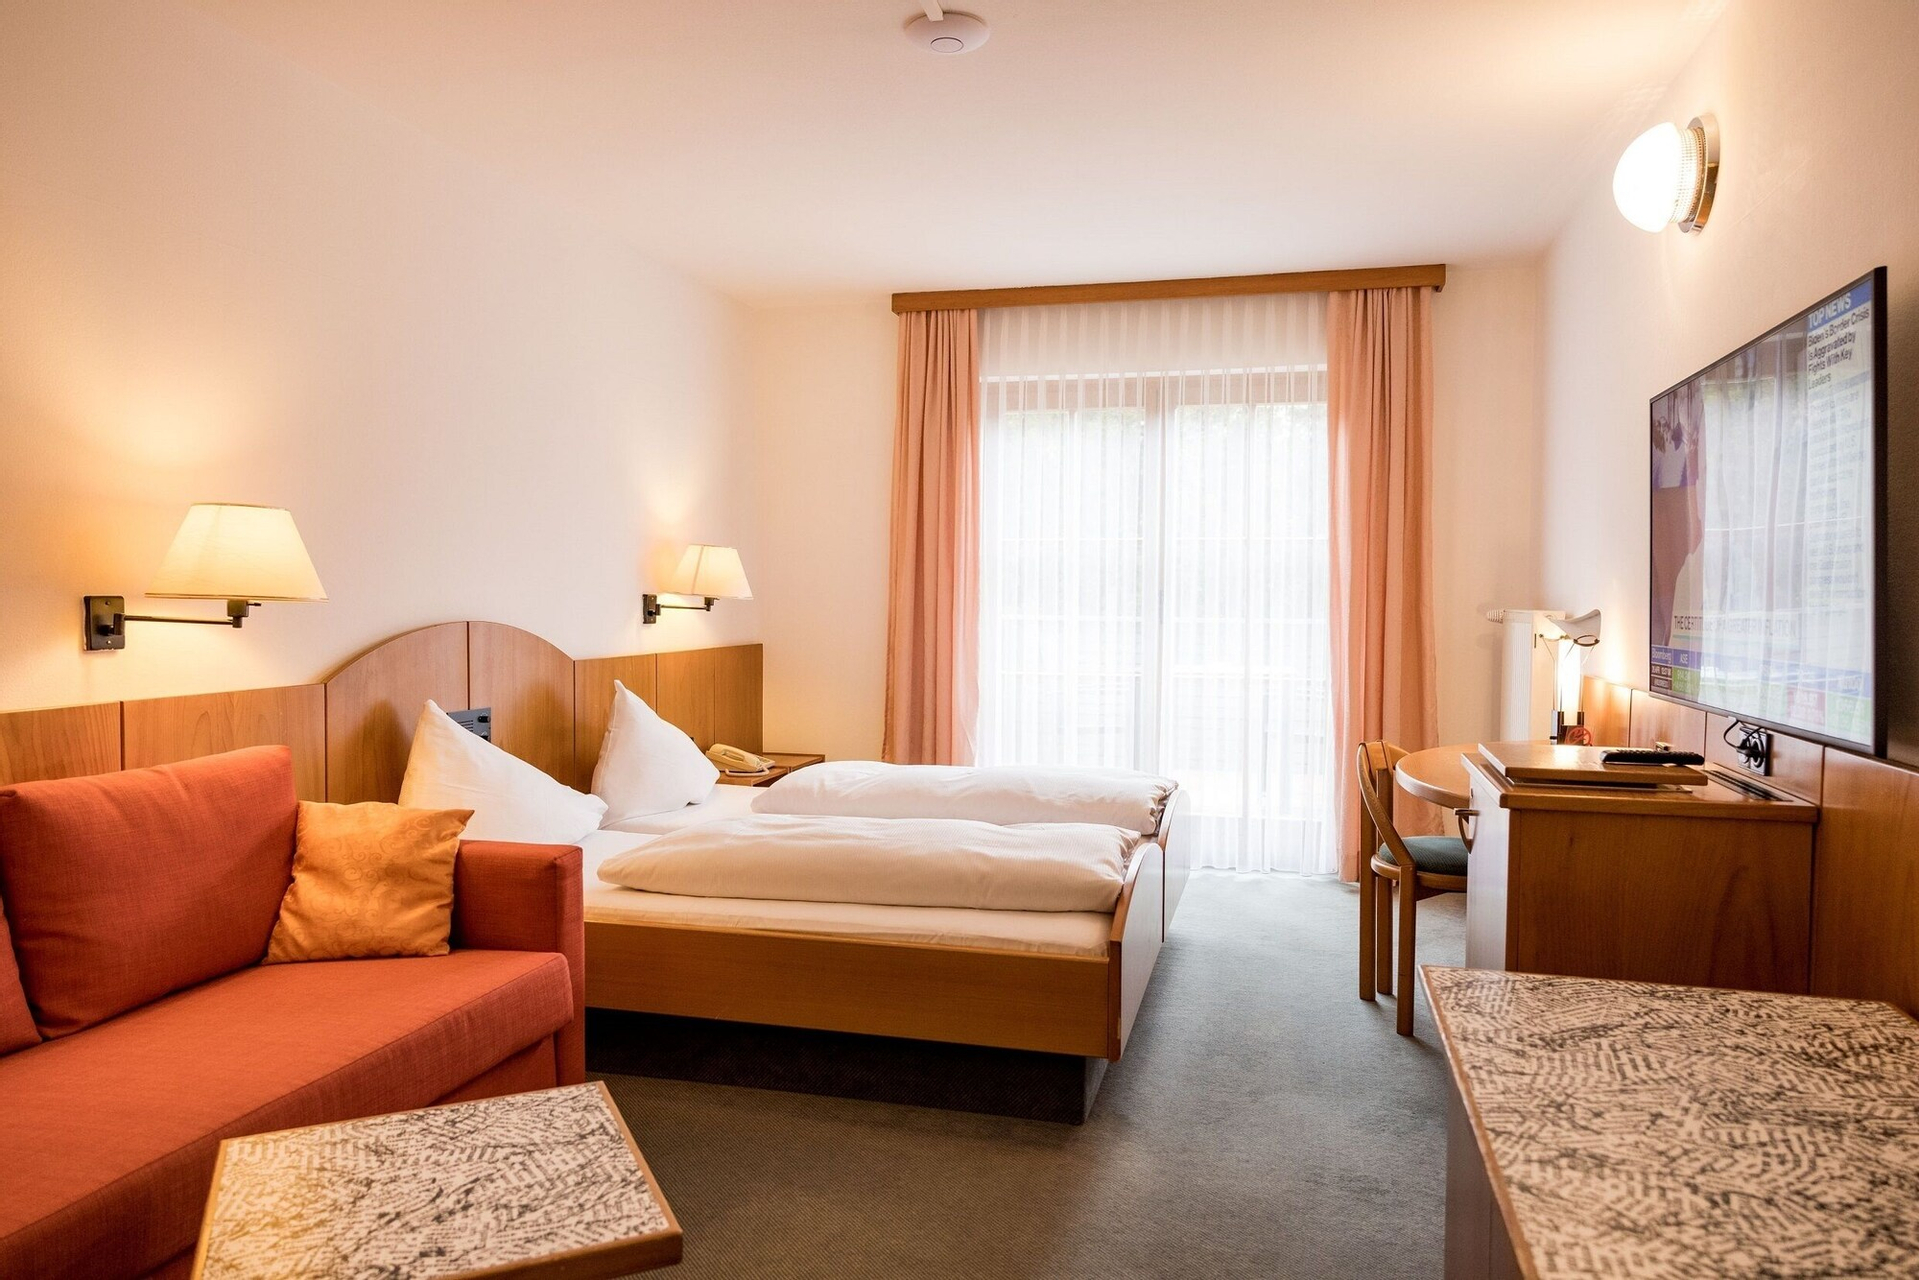 Bedroom 1, Hotel Edlingerwirt - Sauna & Golfsimulator inklusive, Spittal an der Drau